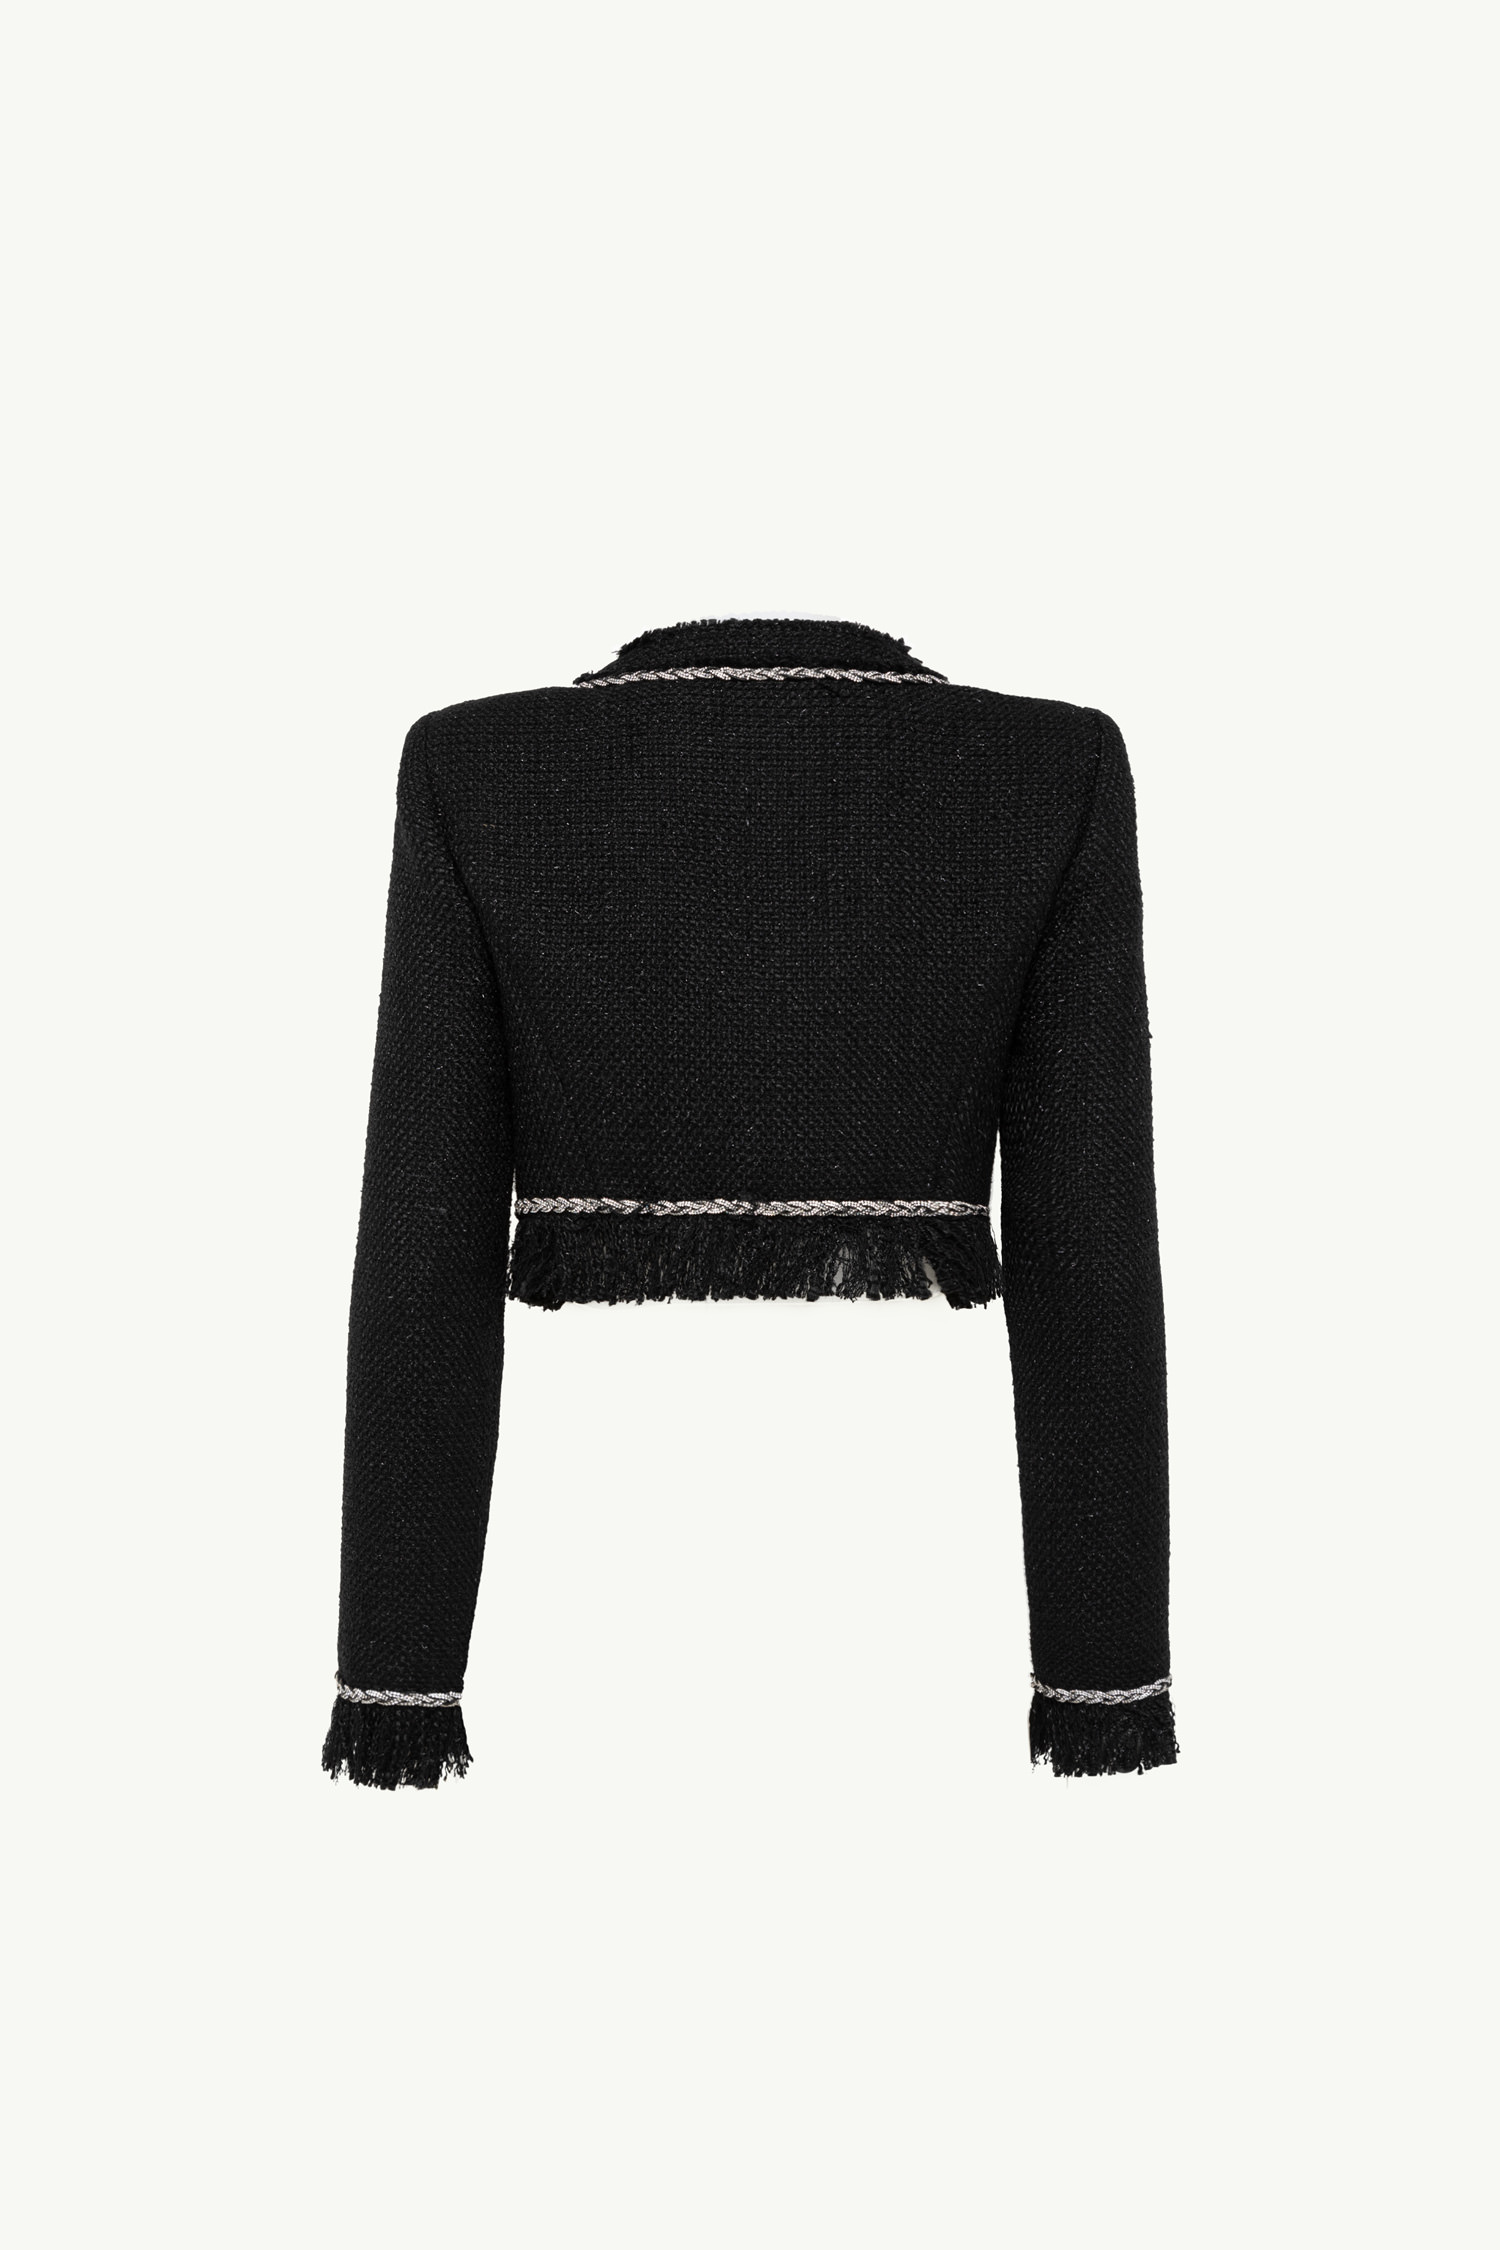 Giuseppe Di Morabito crystal-embellished wool blend blazer - Black